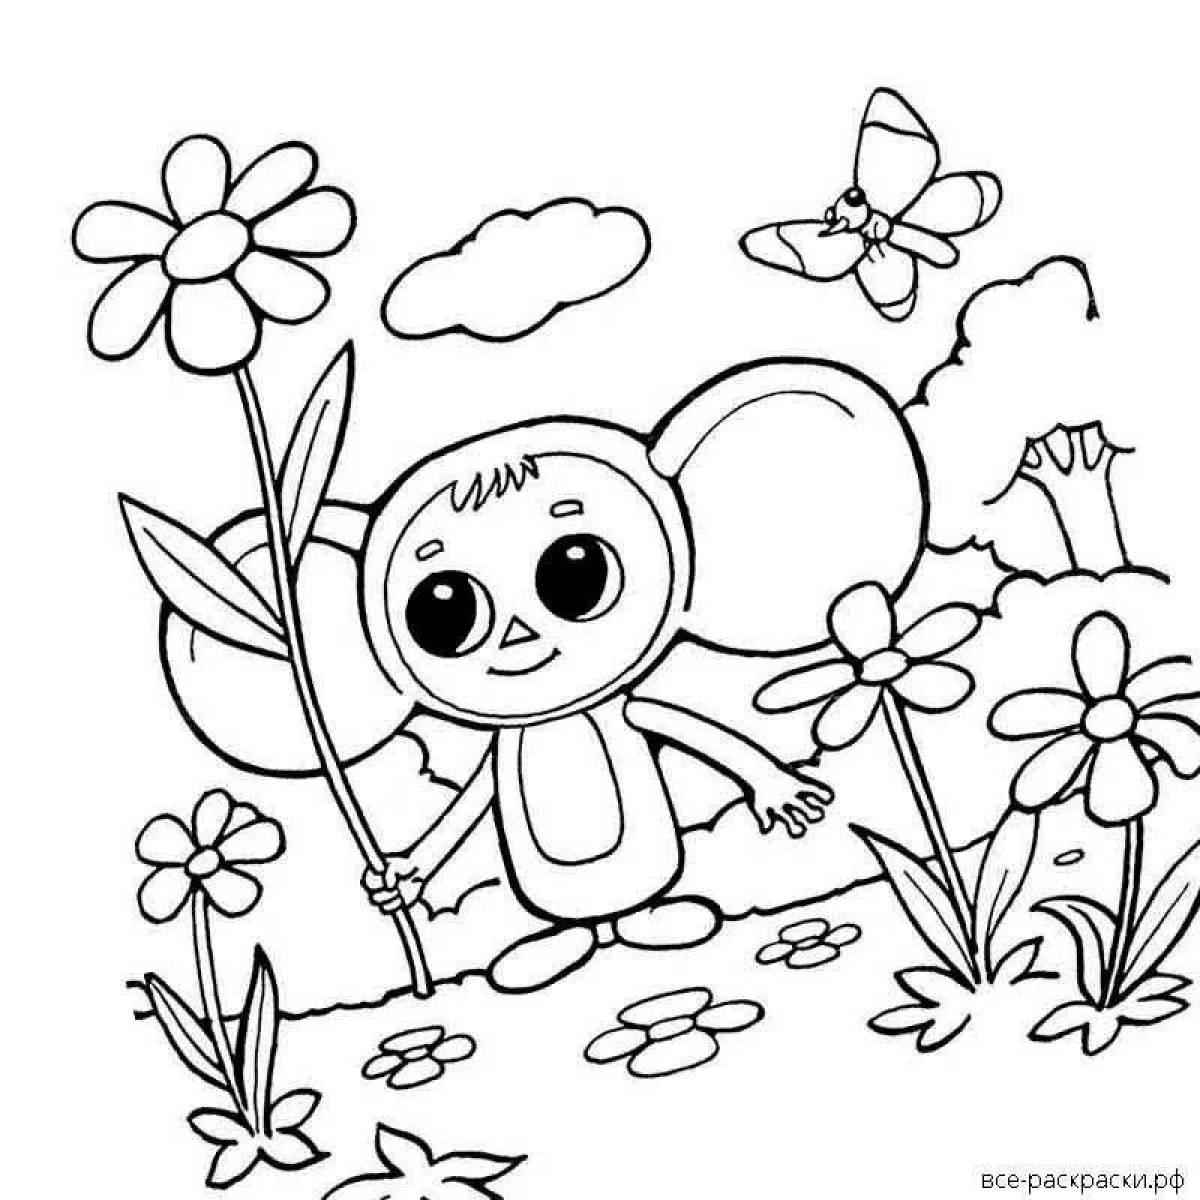 Cheburashka invitation coloring book for kids